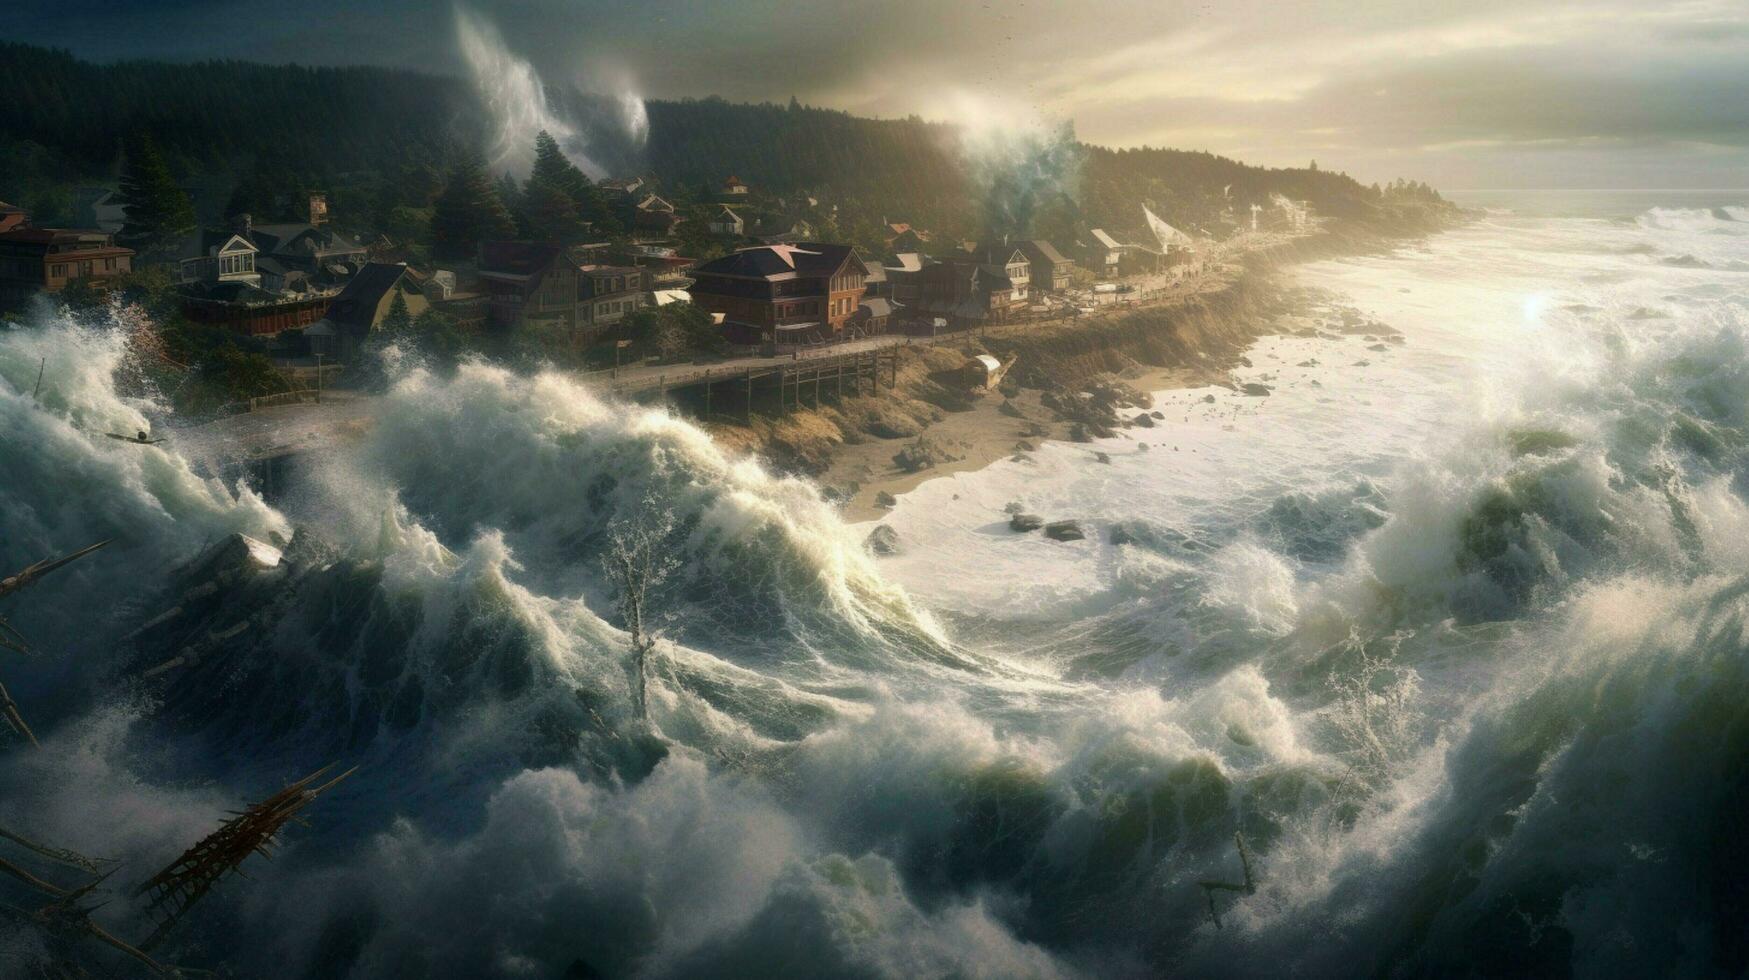 tsunami corriendo terminado costero paisaje enviando foto